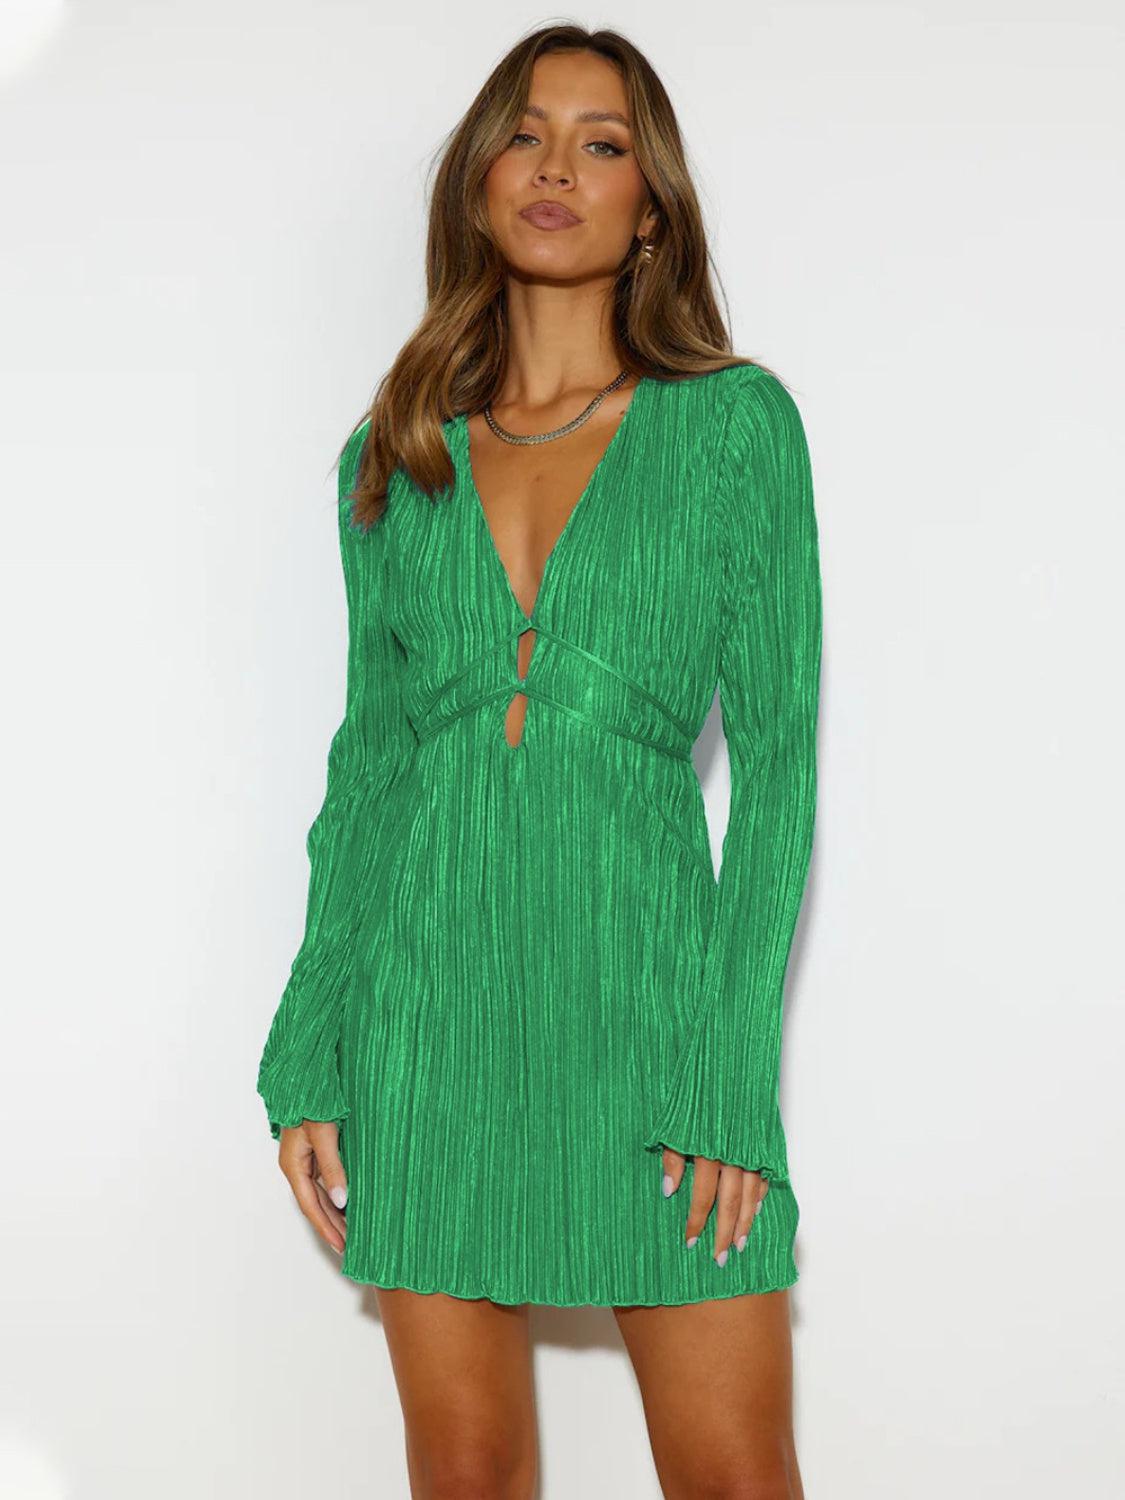 a model in a green dress